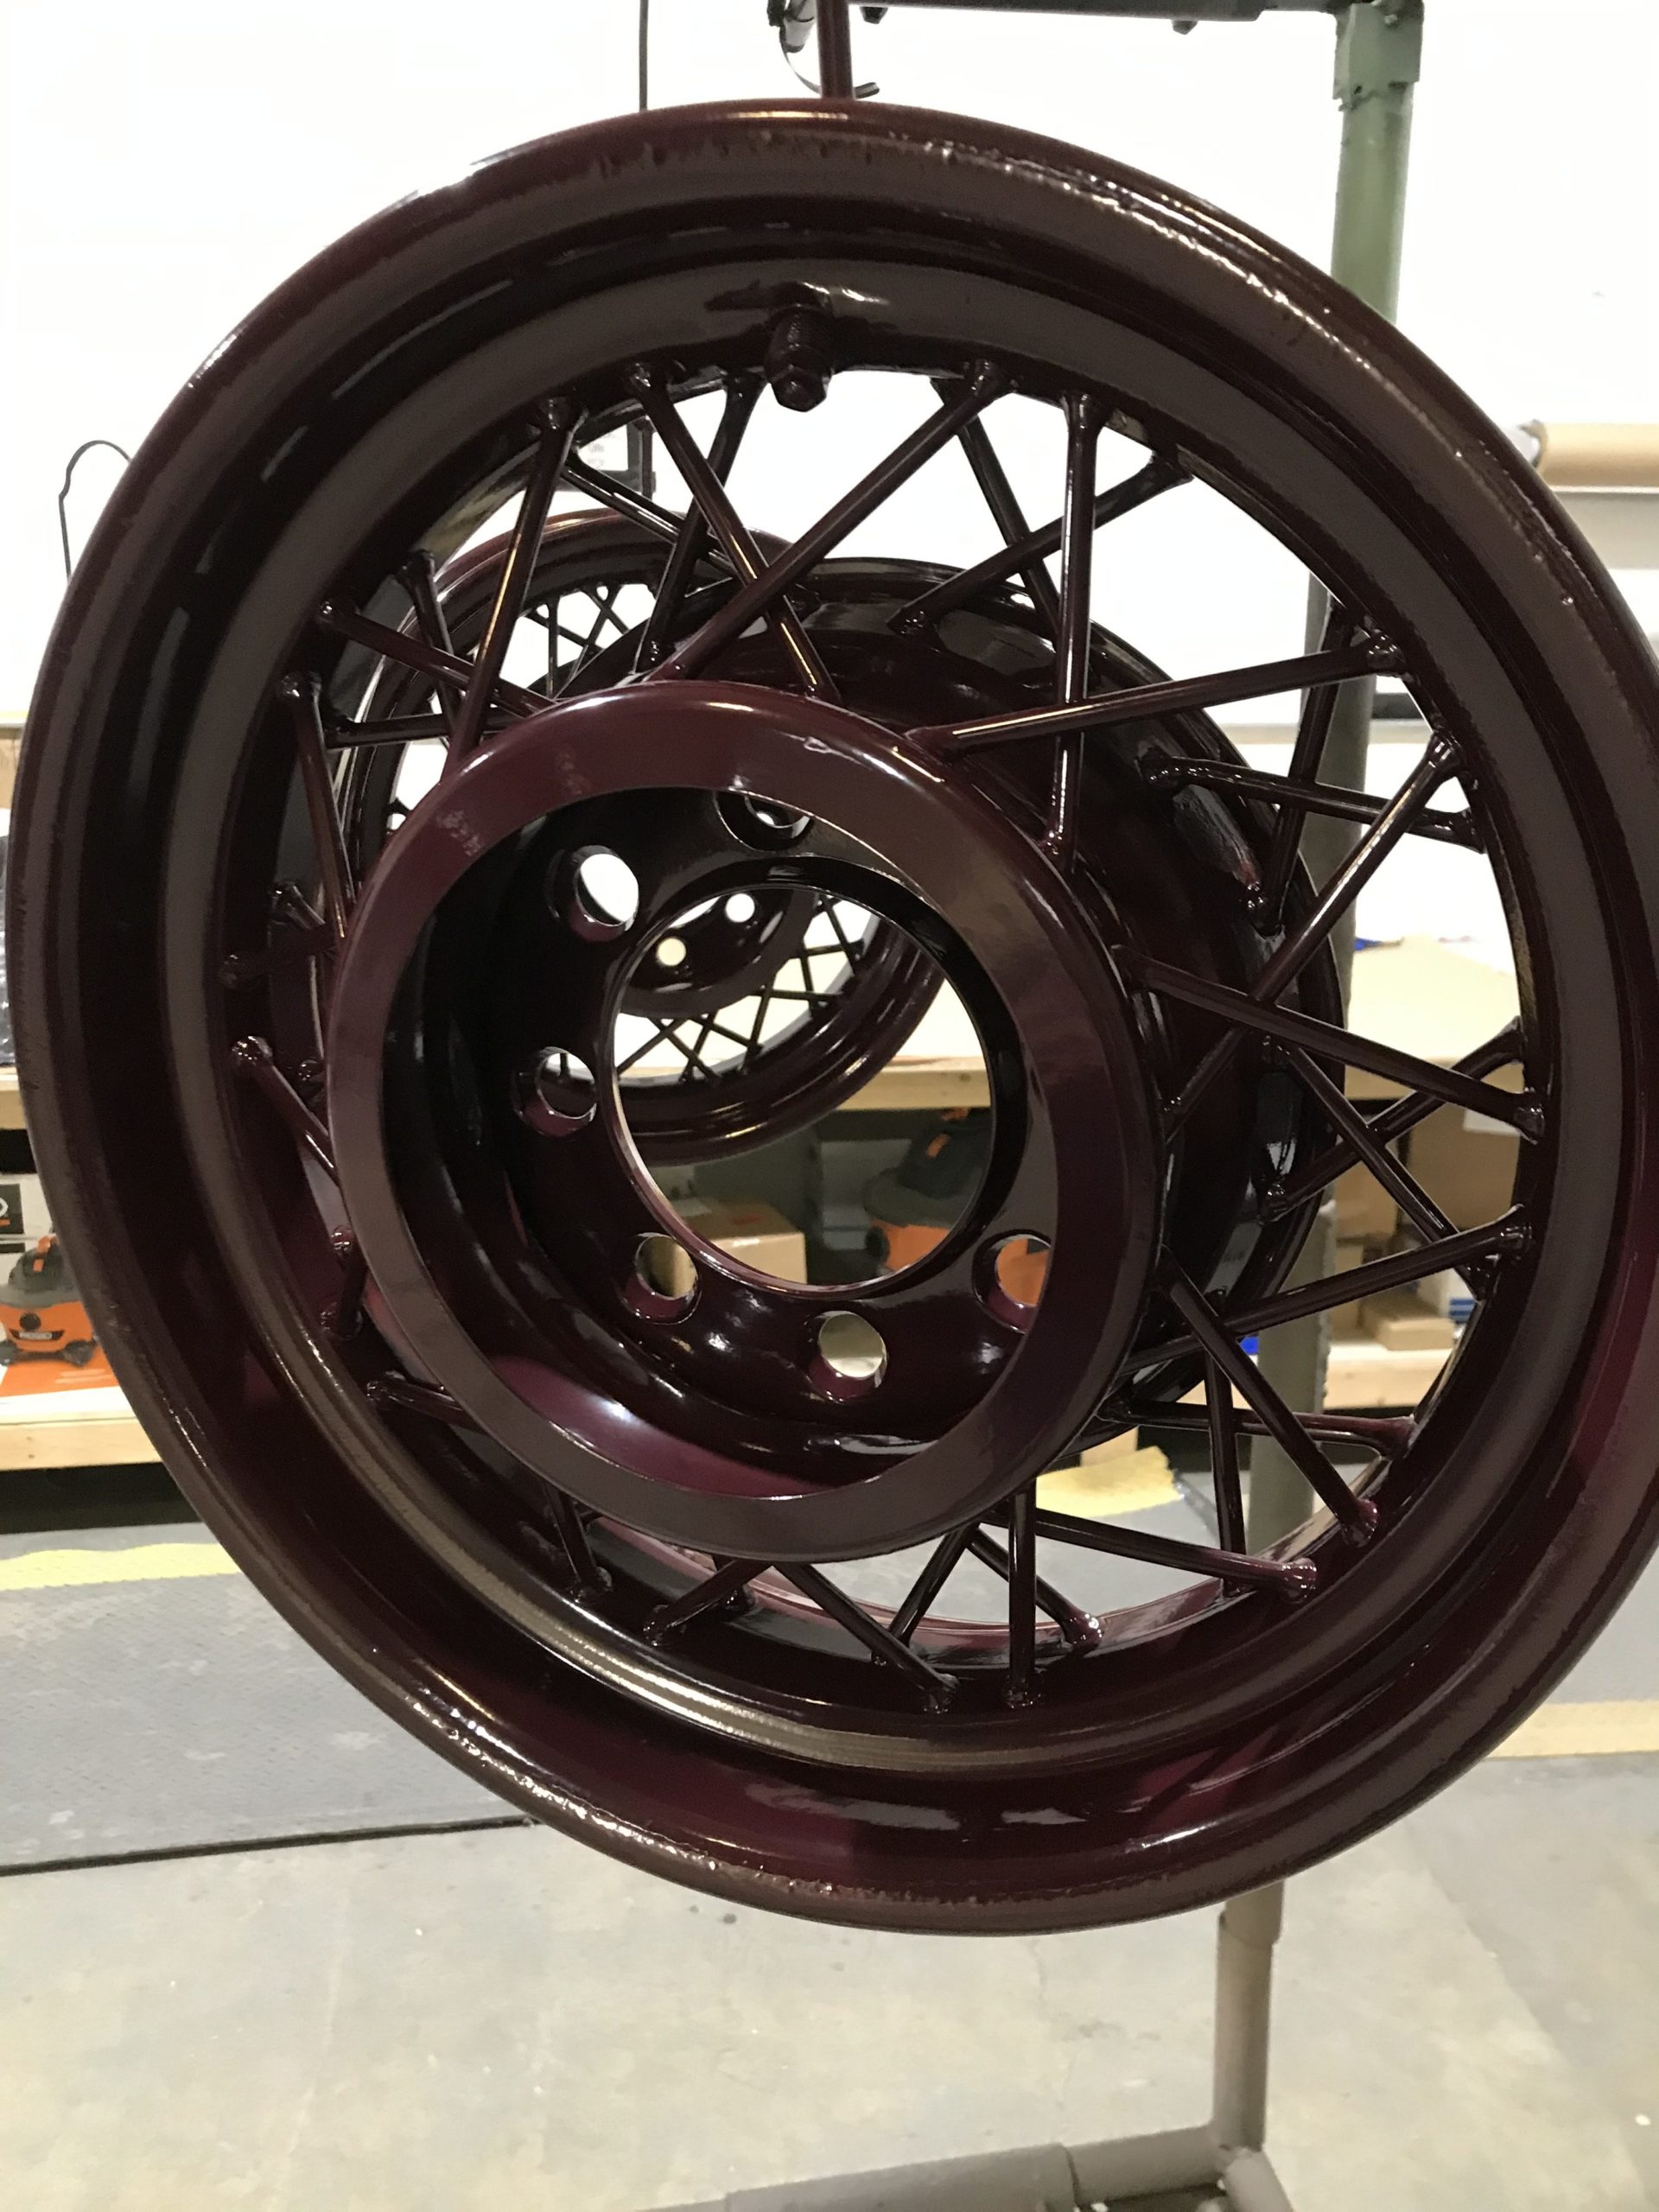 Model A Customized Wheels Powder coating rims CT